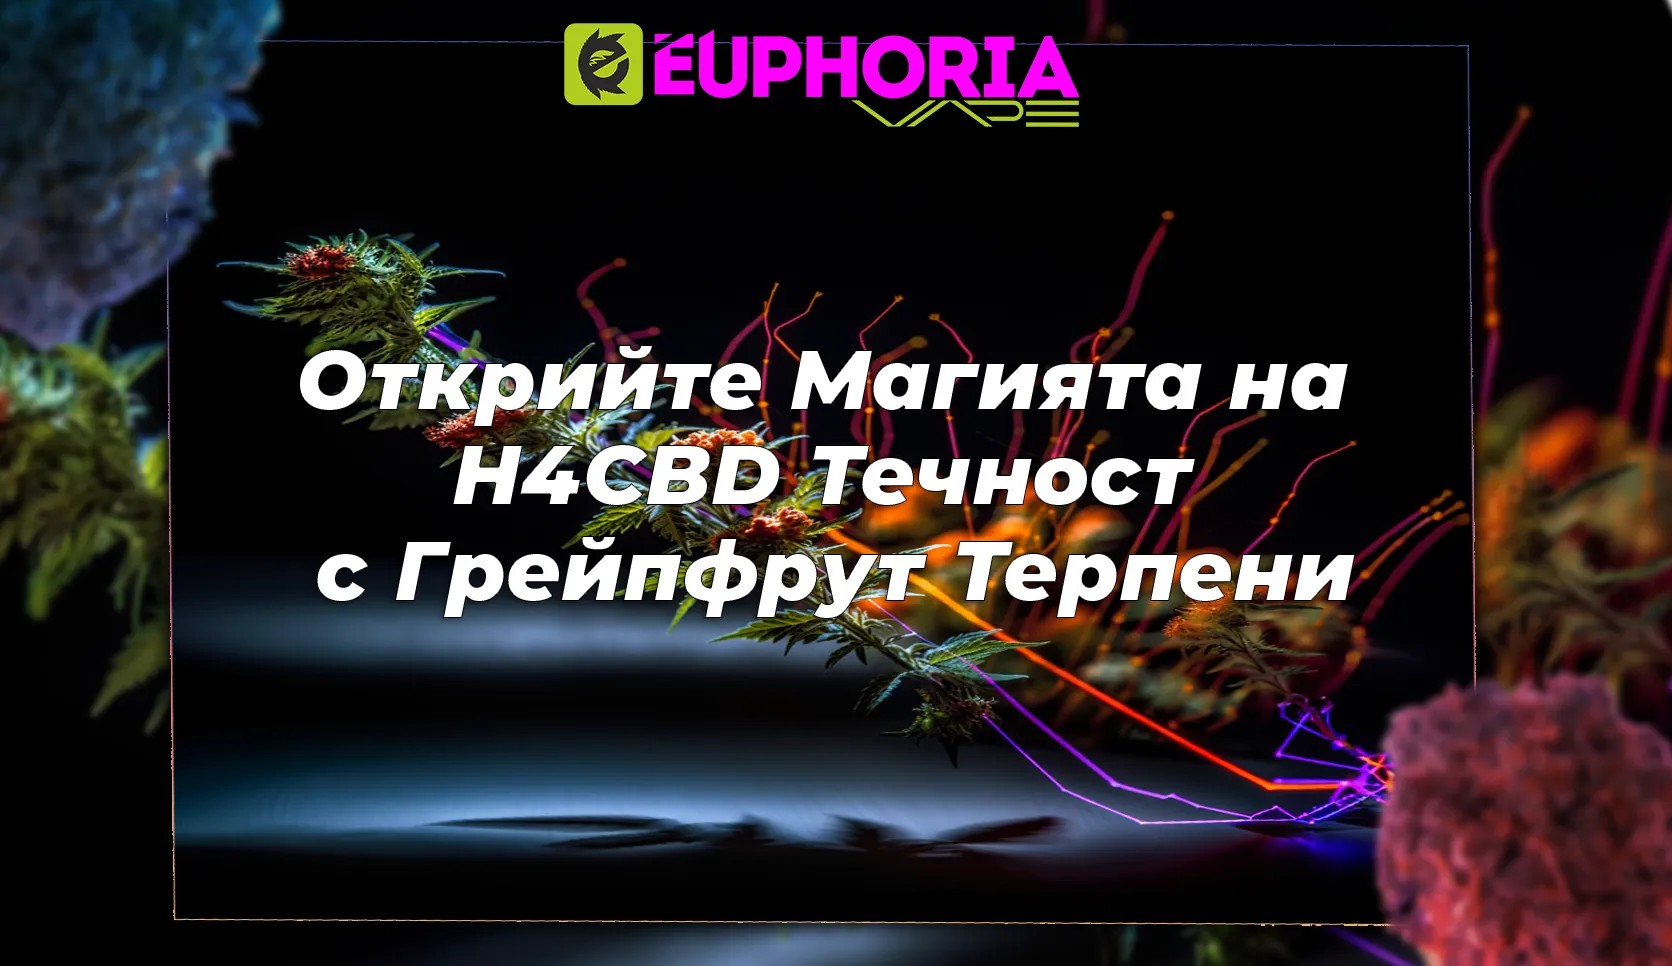 H4CBD масло, ползи и качество E-Euphoria